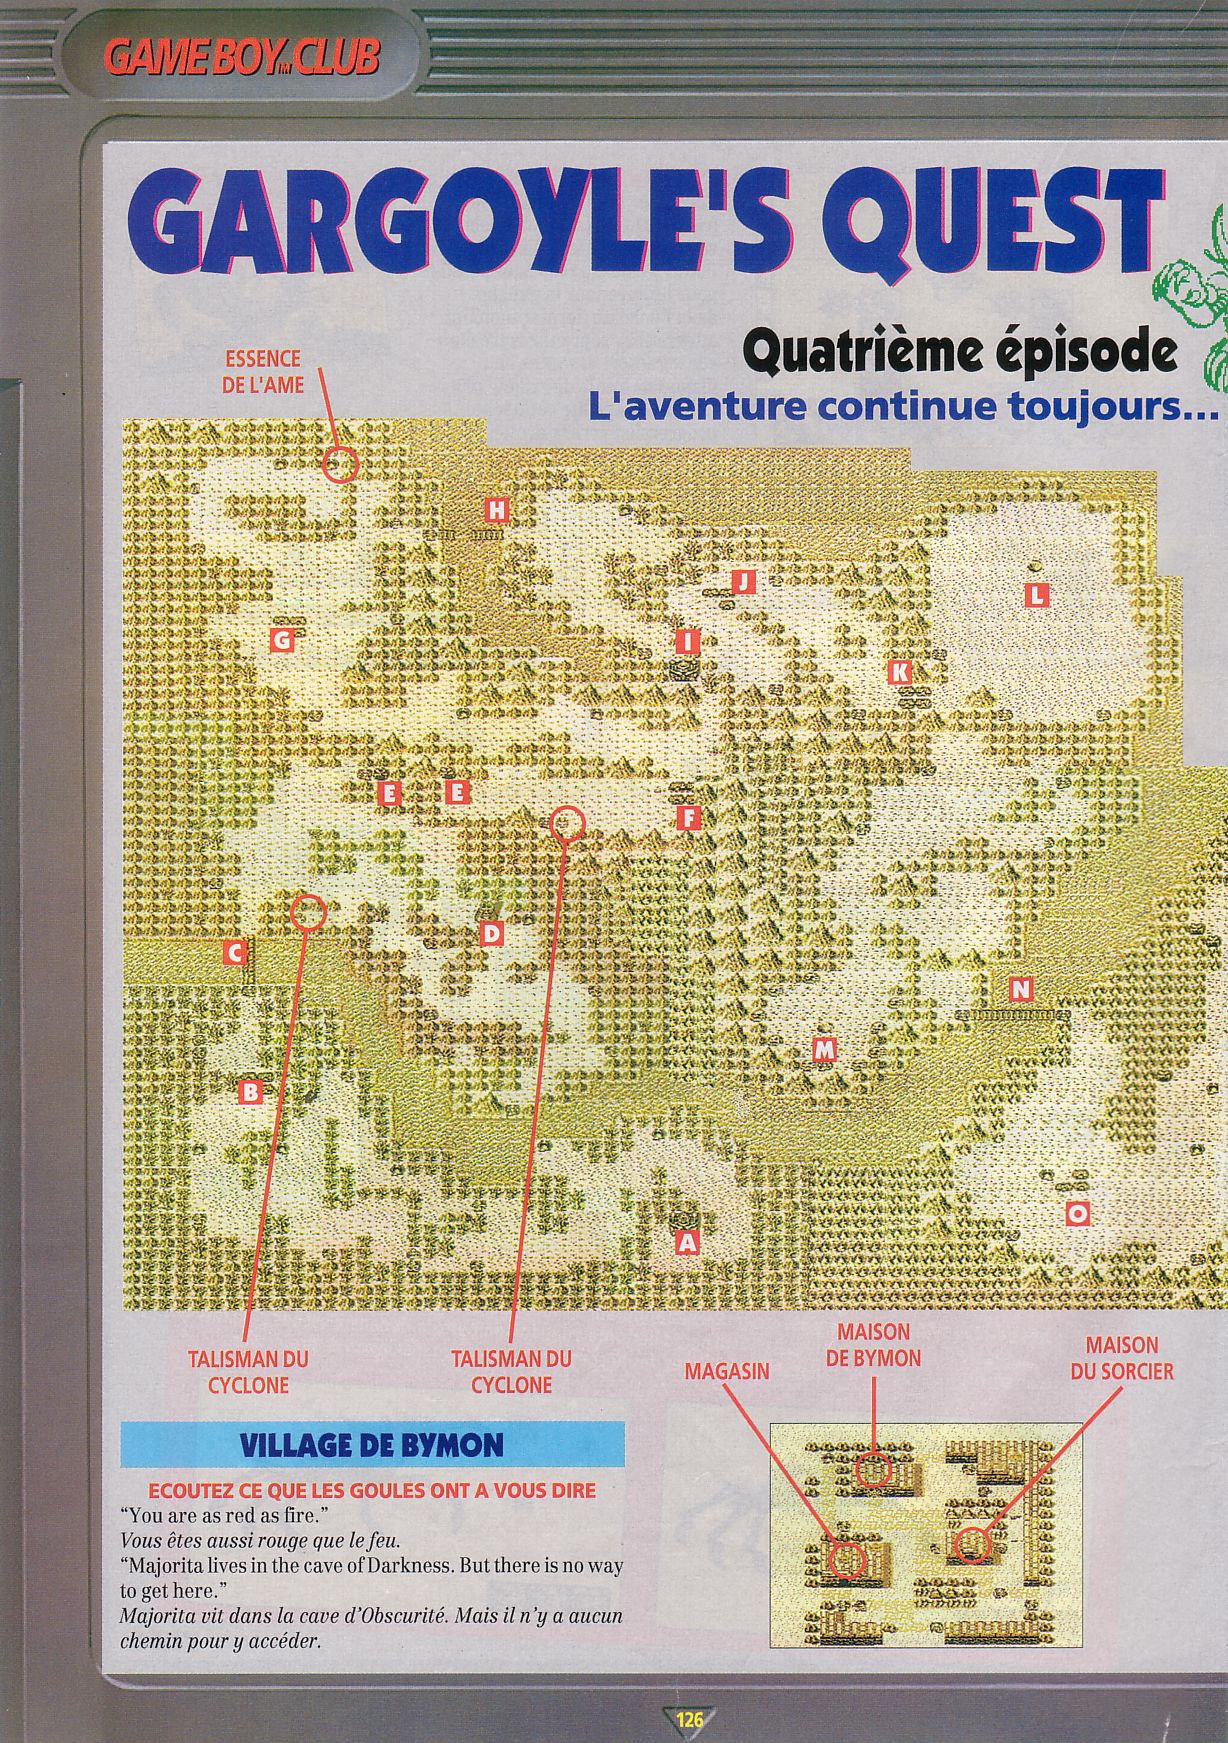 tests//1155/Nintendo Player 007 - Page 126 (1992-11-12).jpg